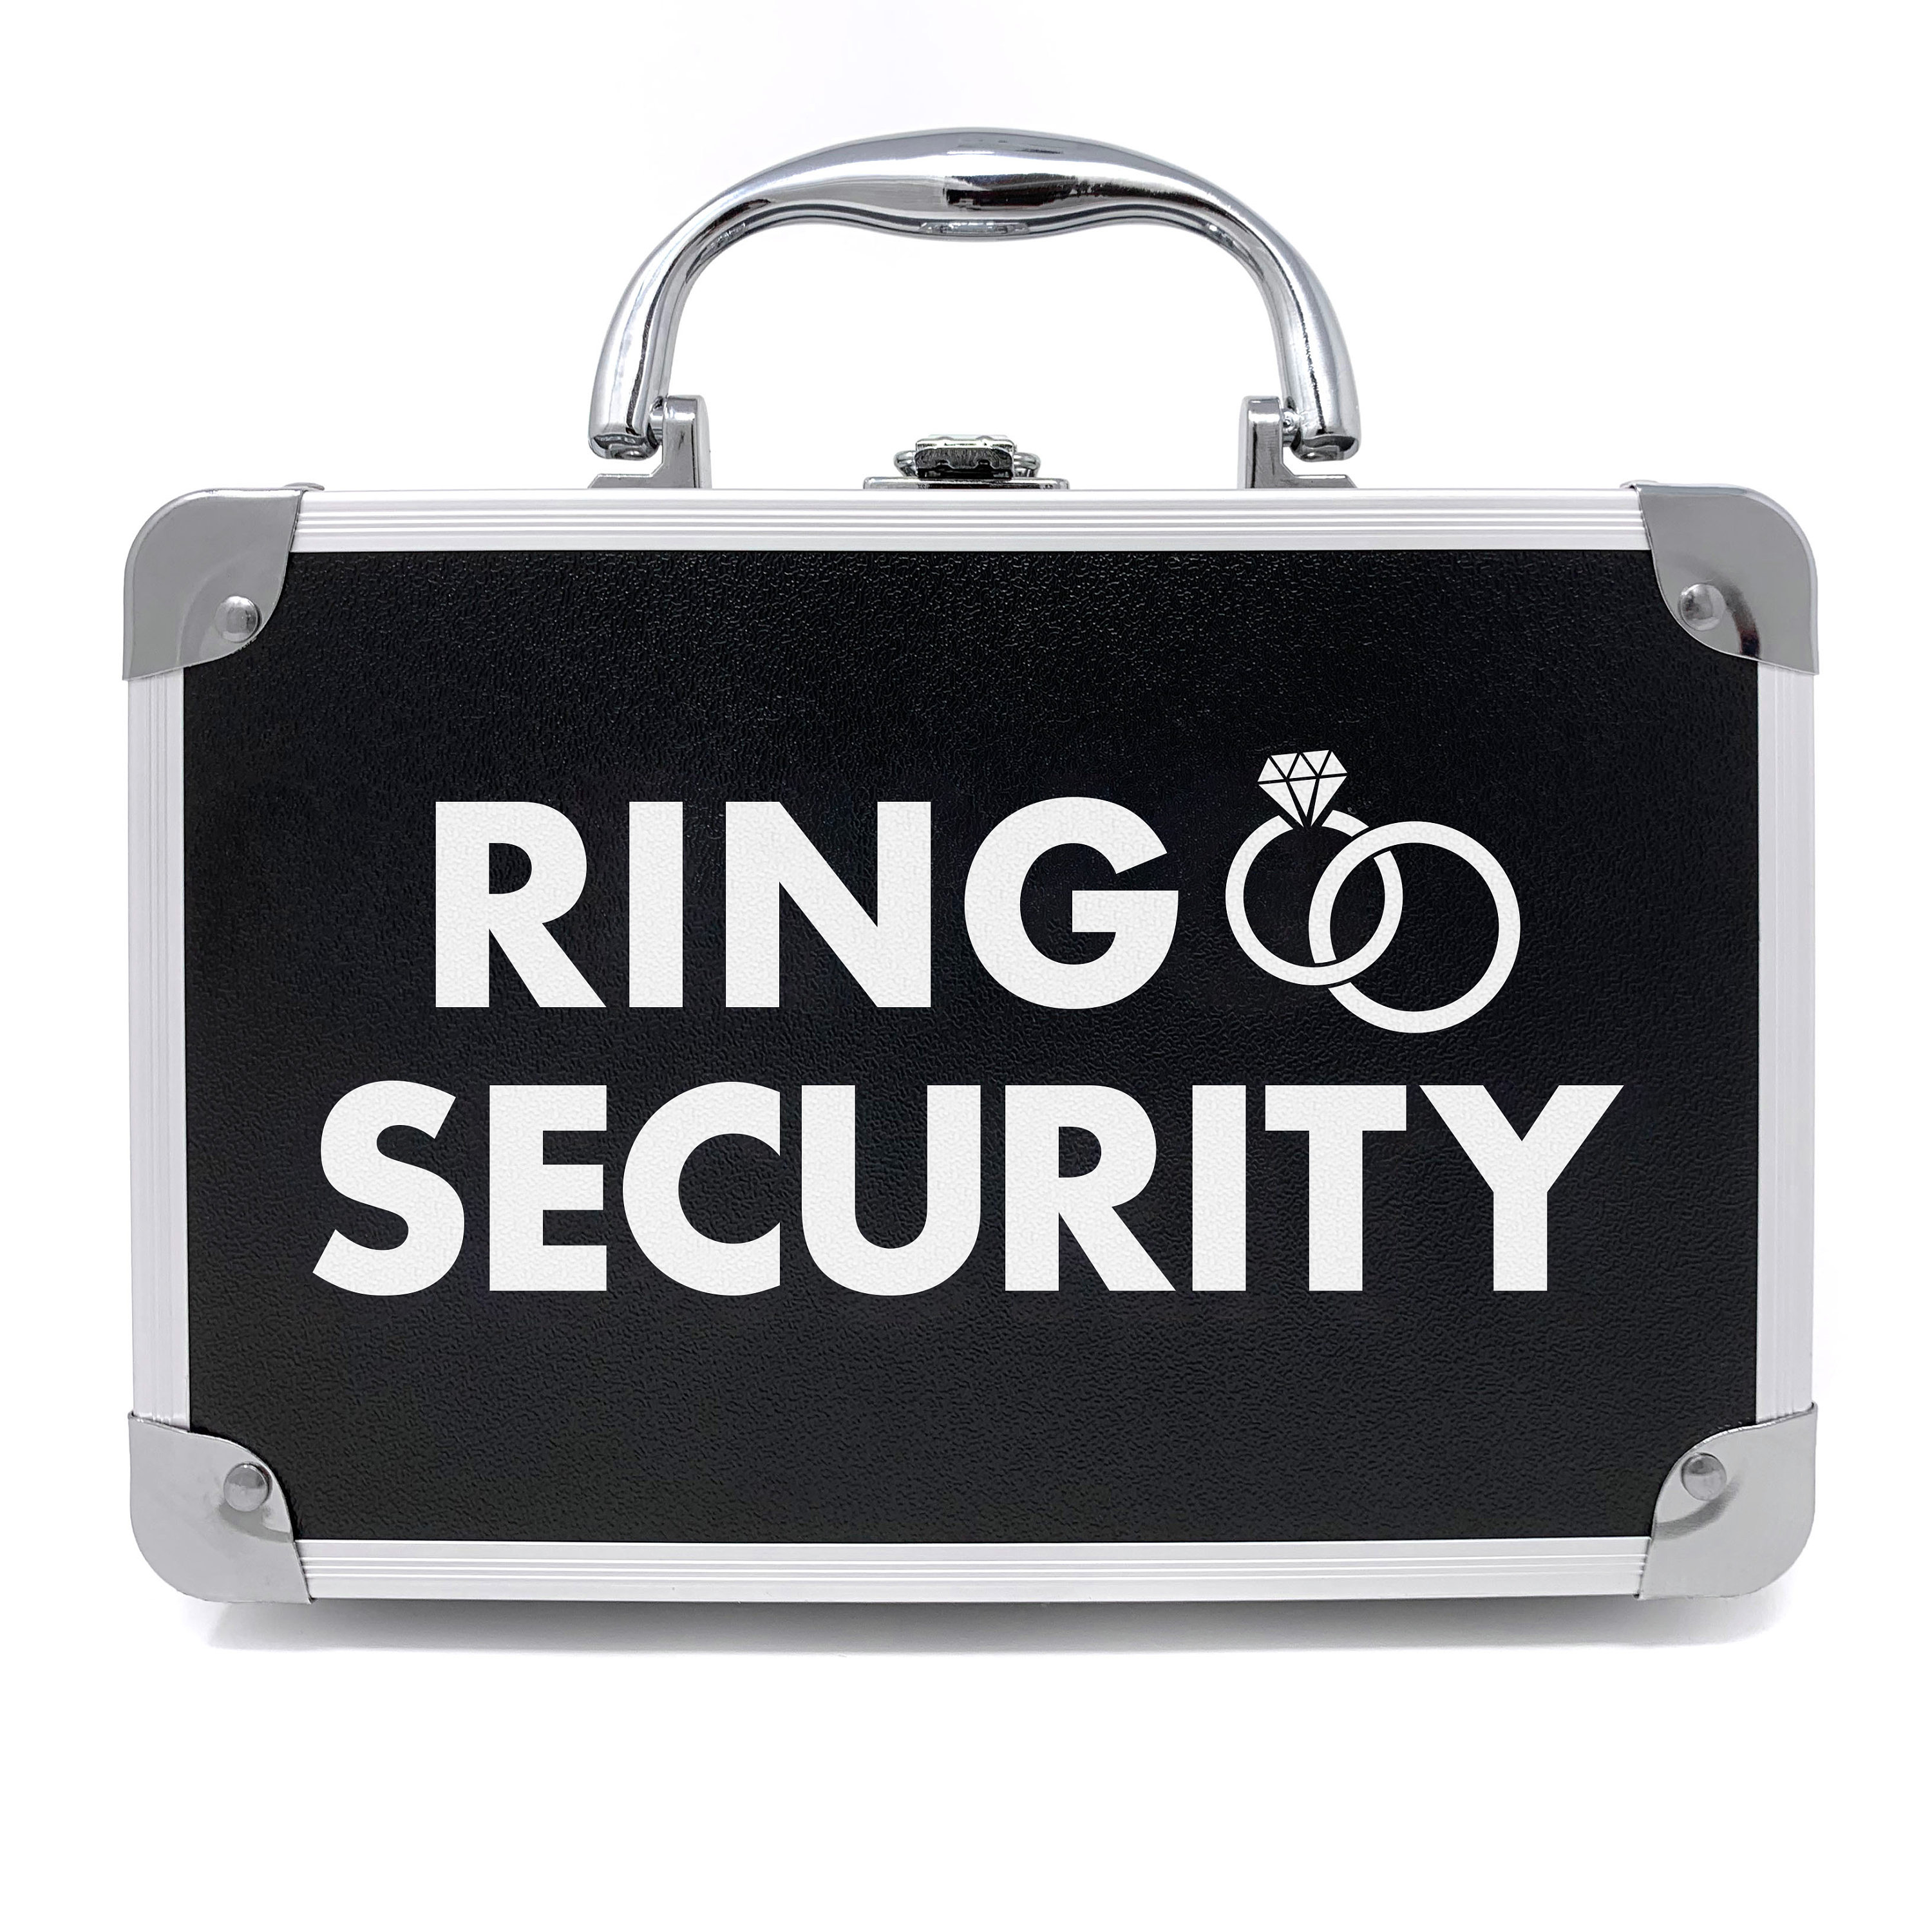 Include 1PCS Acoustic Earpiece Tube 1PCS Ring Bearer Sunglass 1PCS Ring Security Badge Yuchew Ring Bearer Security Box Gifts Ring Security Wedding Set Accessory 1PCS Wedding Ring Box with 2 Ring 